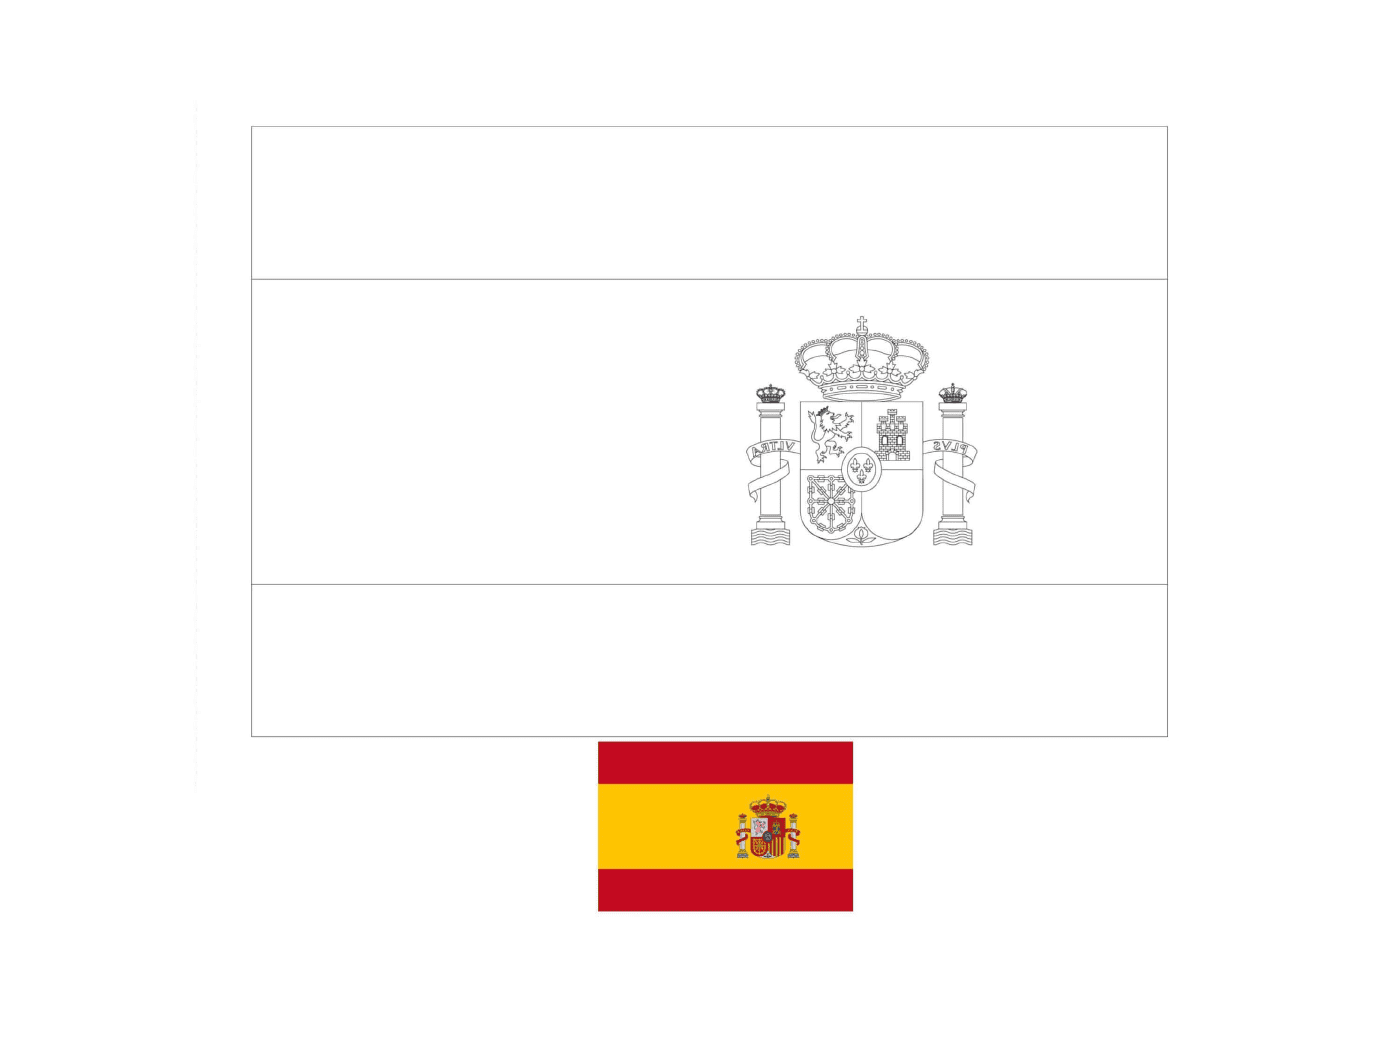  Bandera de España dibujada con colores 